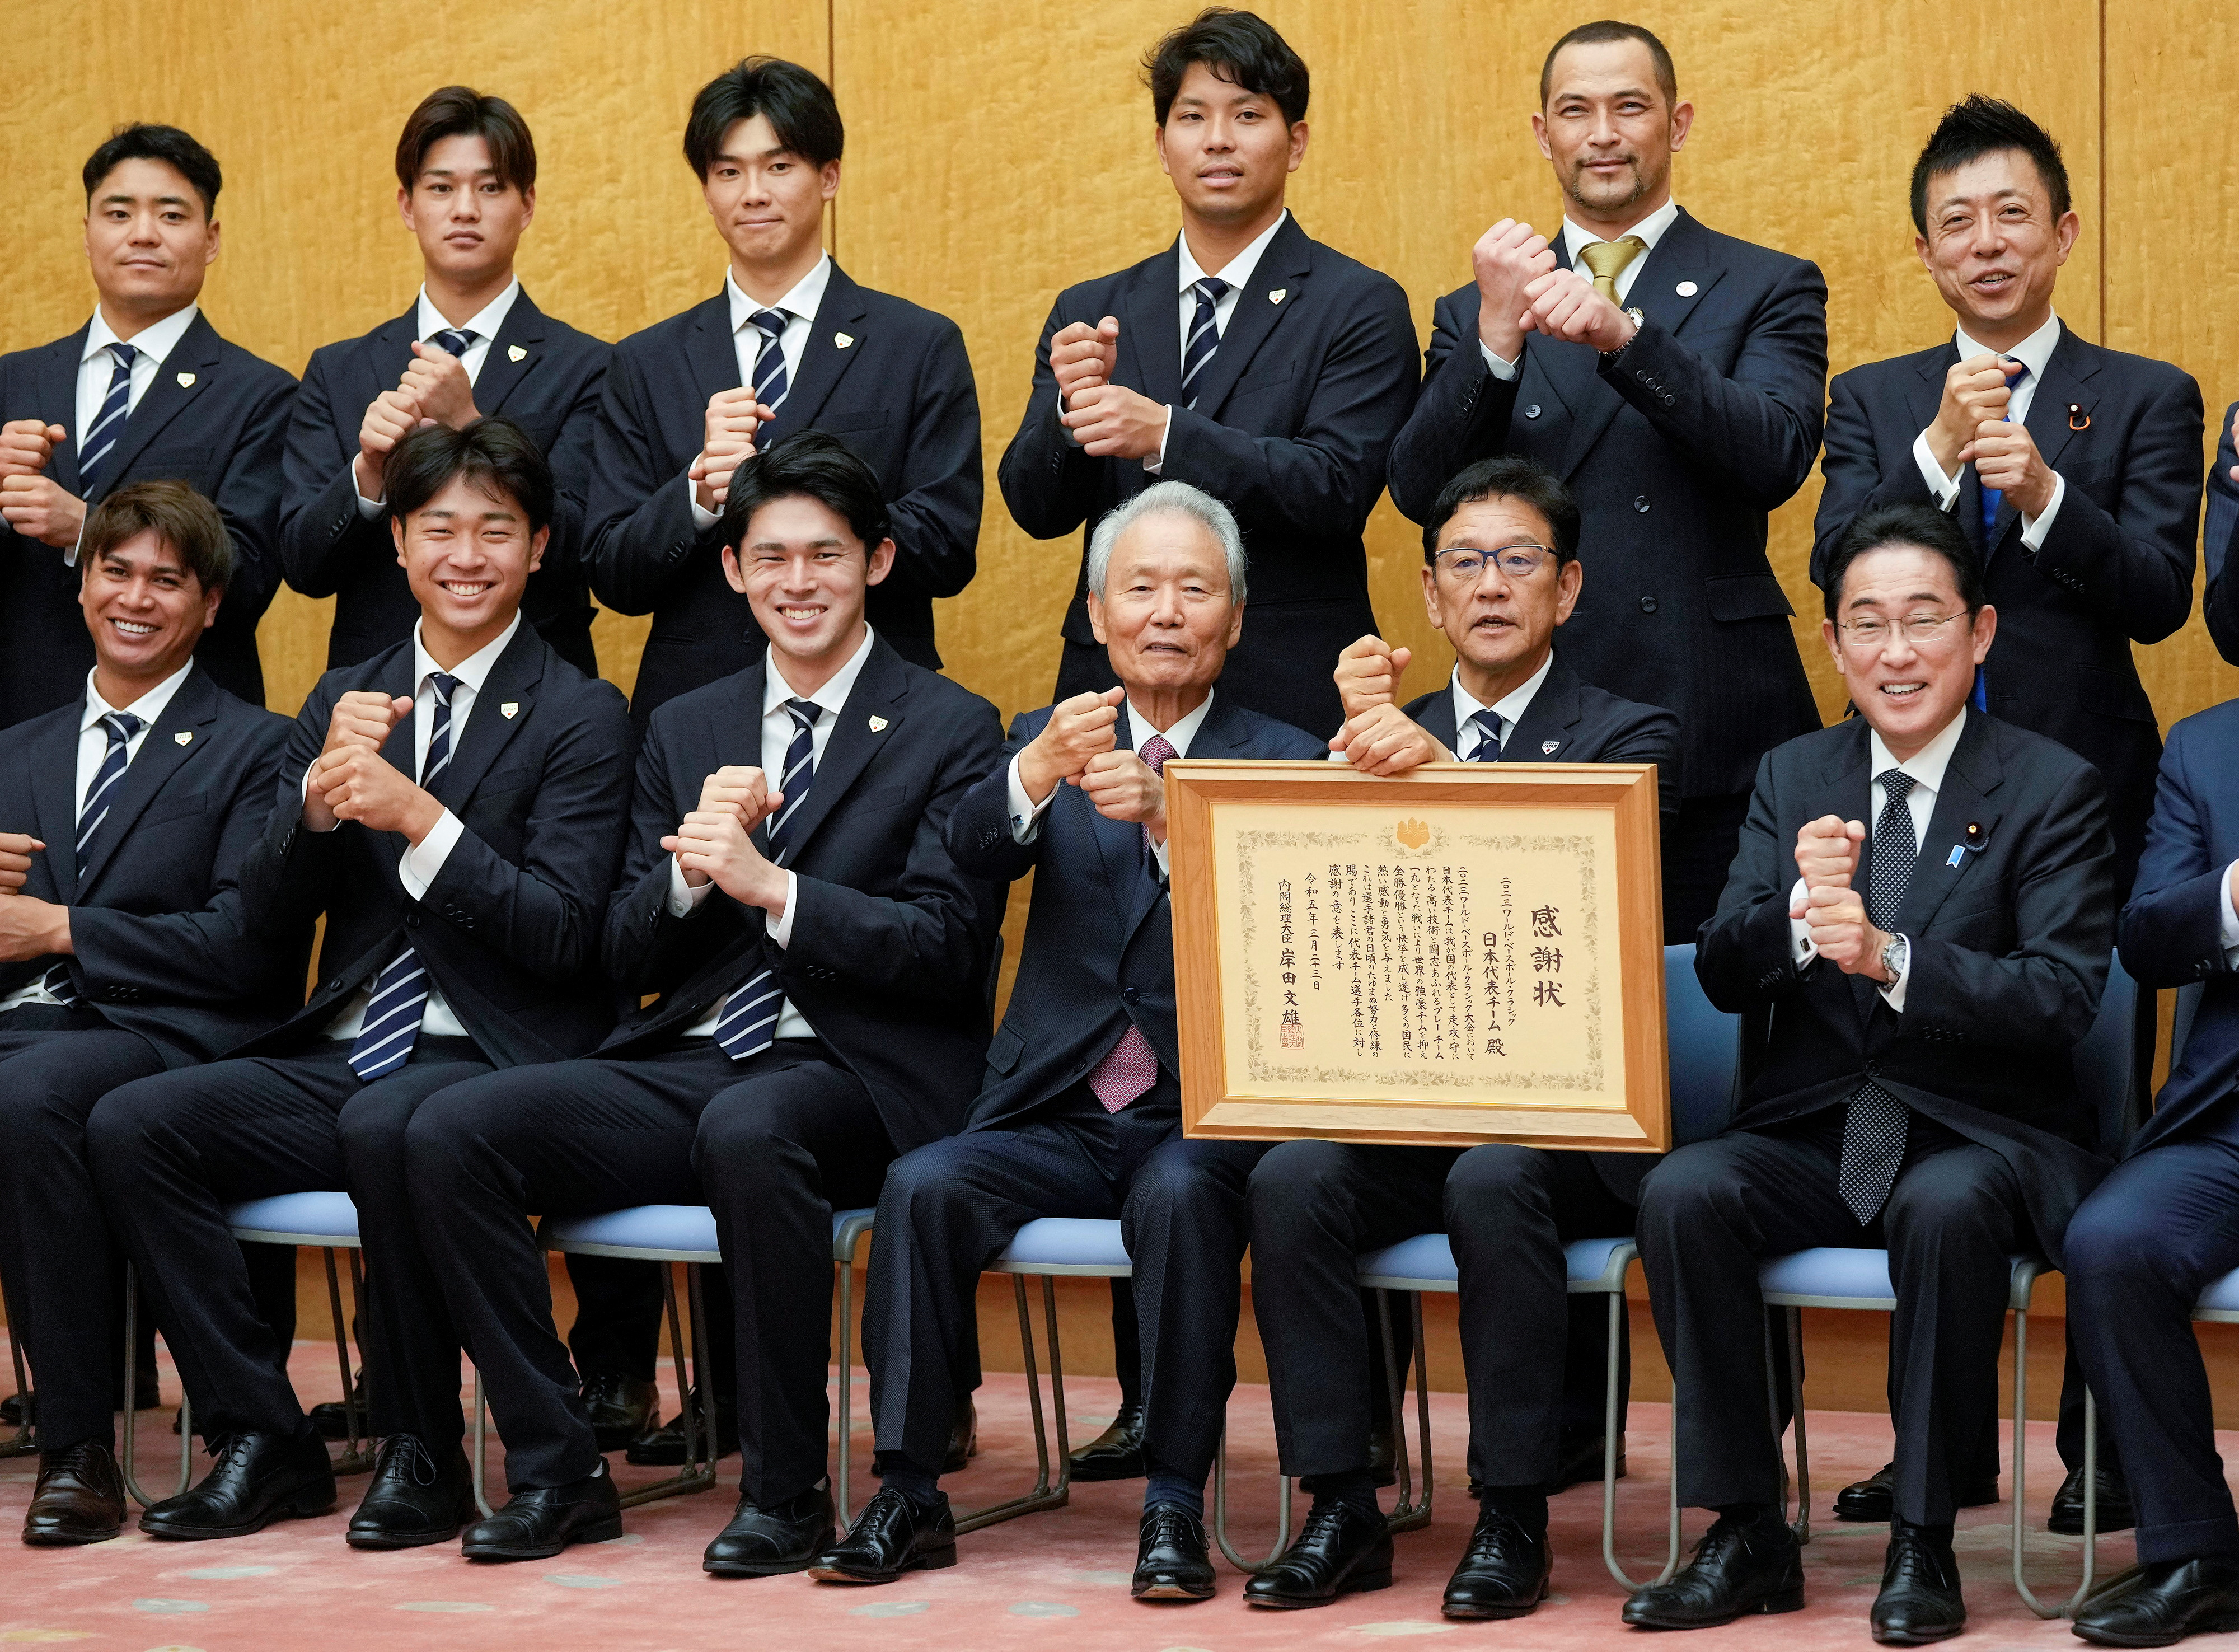 Photos: Japan wins World Baseball Classic after beating U.S. 3-2